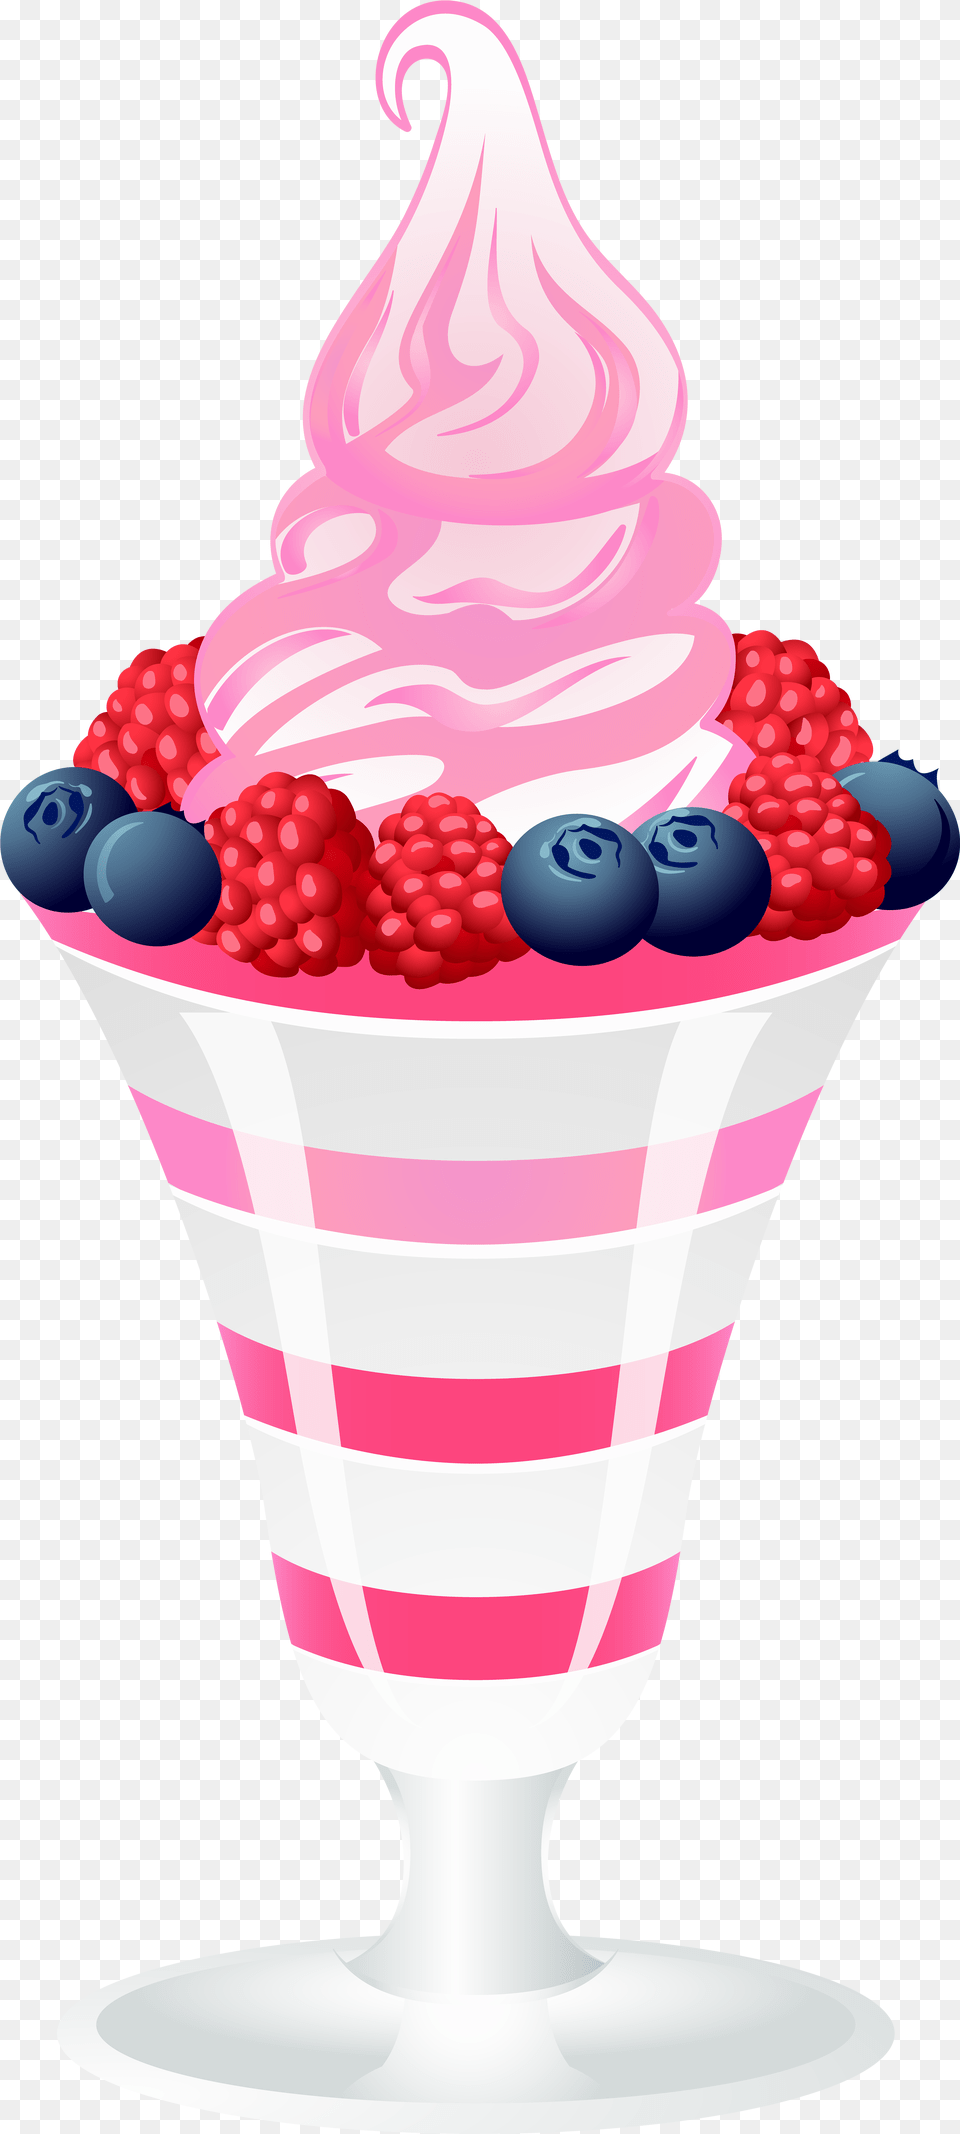 Ice Cream Sundae With Raspberries And Blackberries Cupcake And Ice Cream Clipart, Dessert, Food, Ice Cream, Berry Free Transparent Png